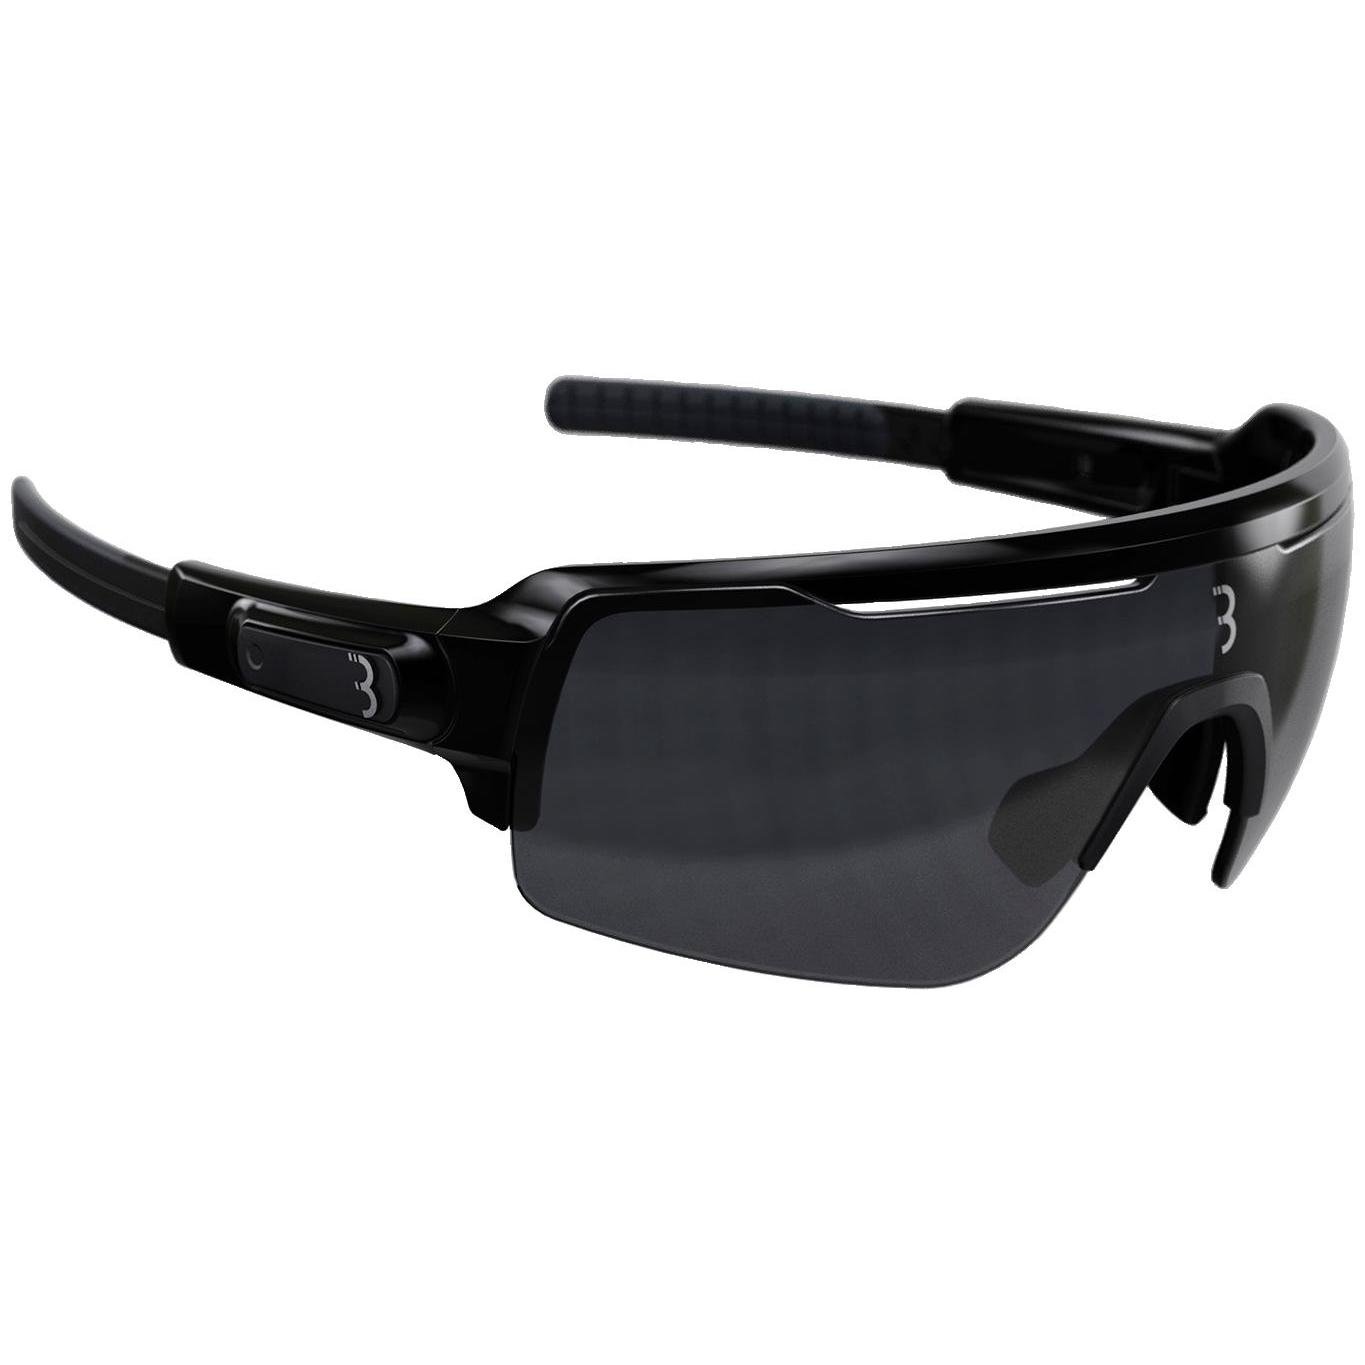 Очки велосипедные BBB 2019 sunglasses Commander PC Smoke MLC silver lens PC clear, glossy black, BSG-61 очки велосипедные bbb adapt fulframe pc smoke lenses неоновый bsg 45